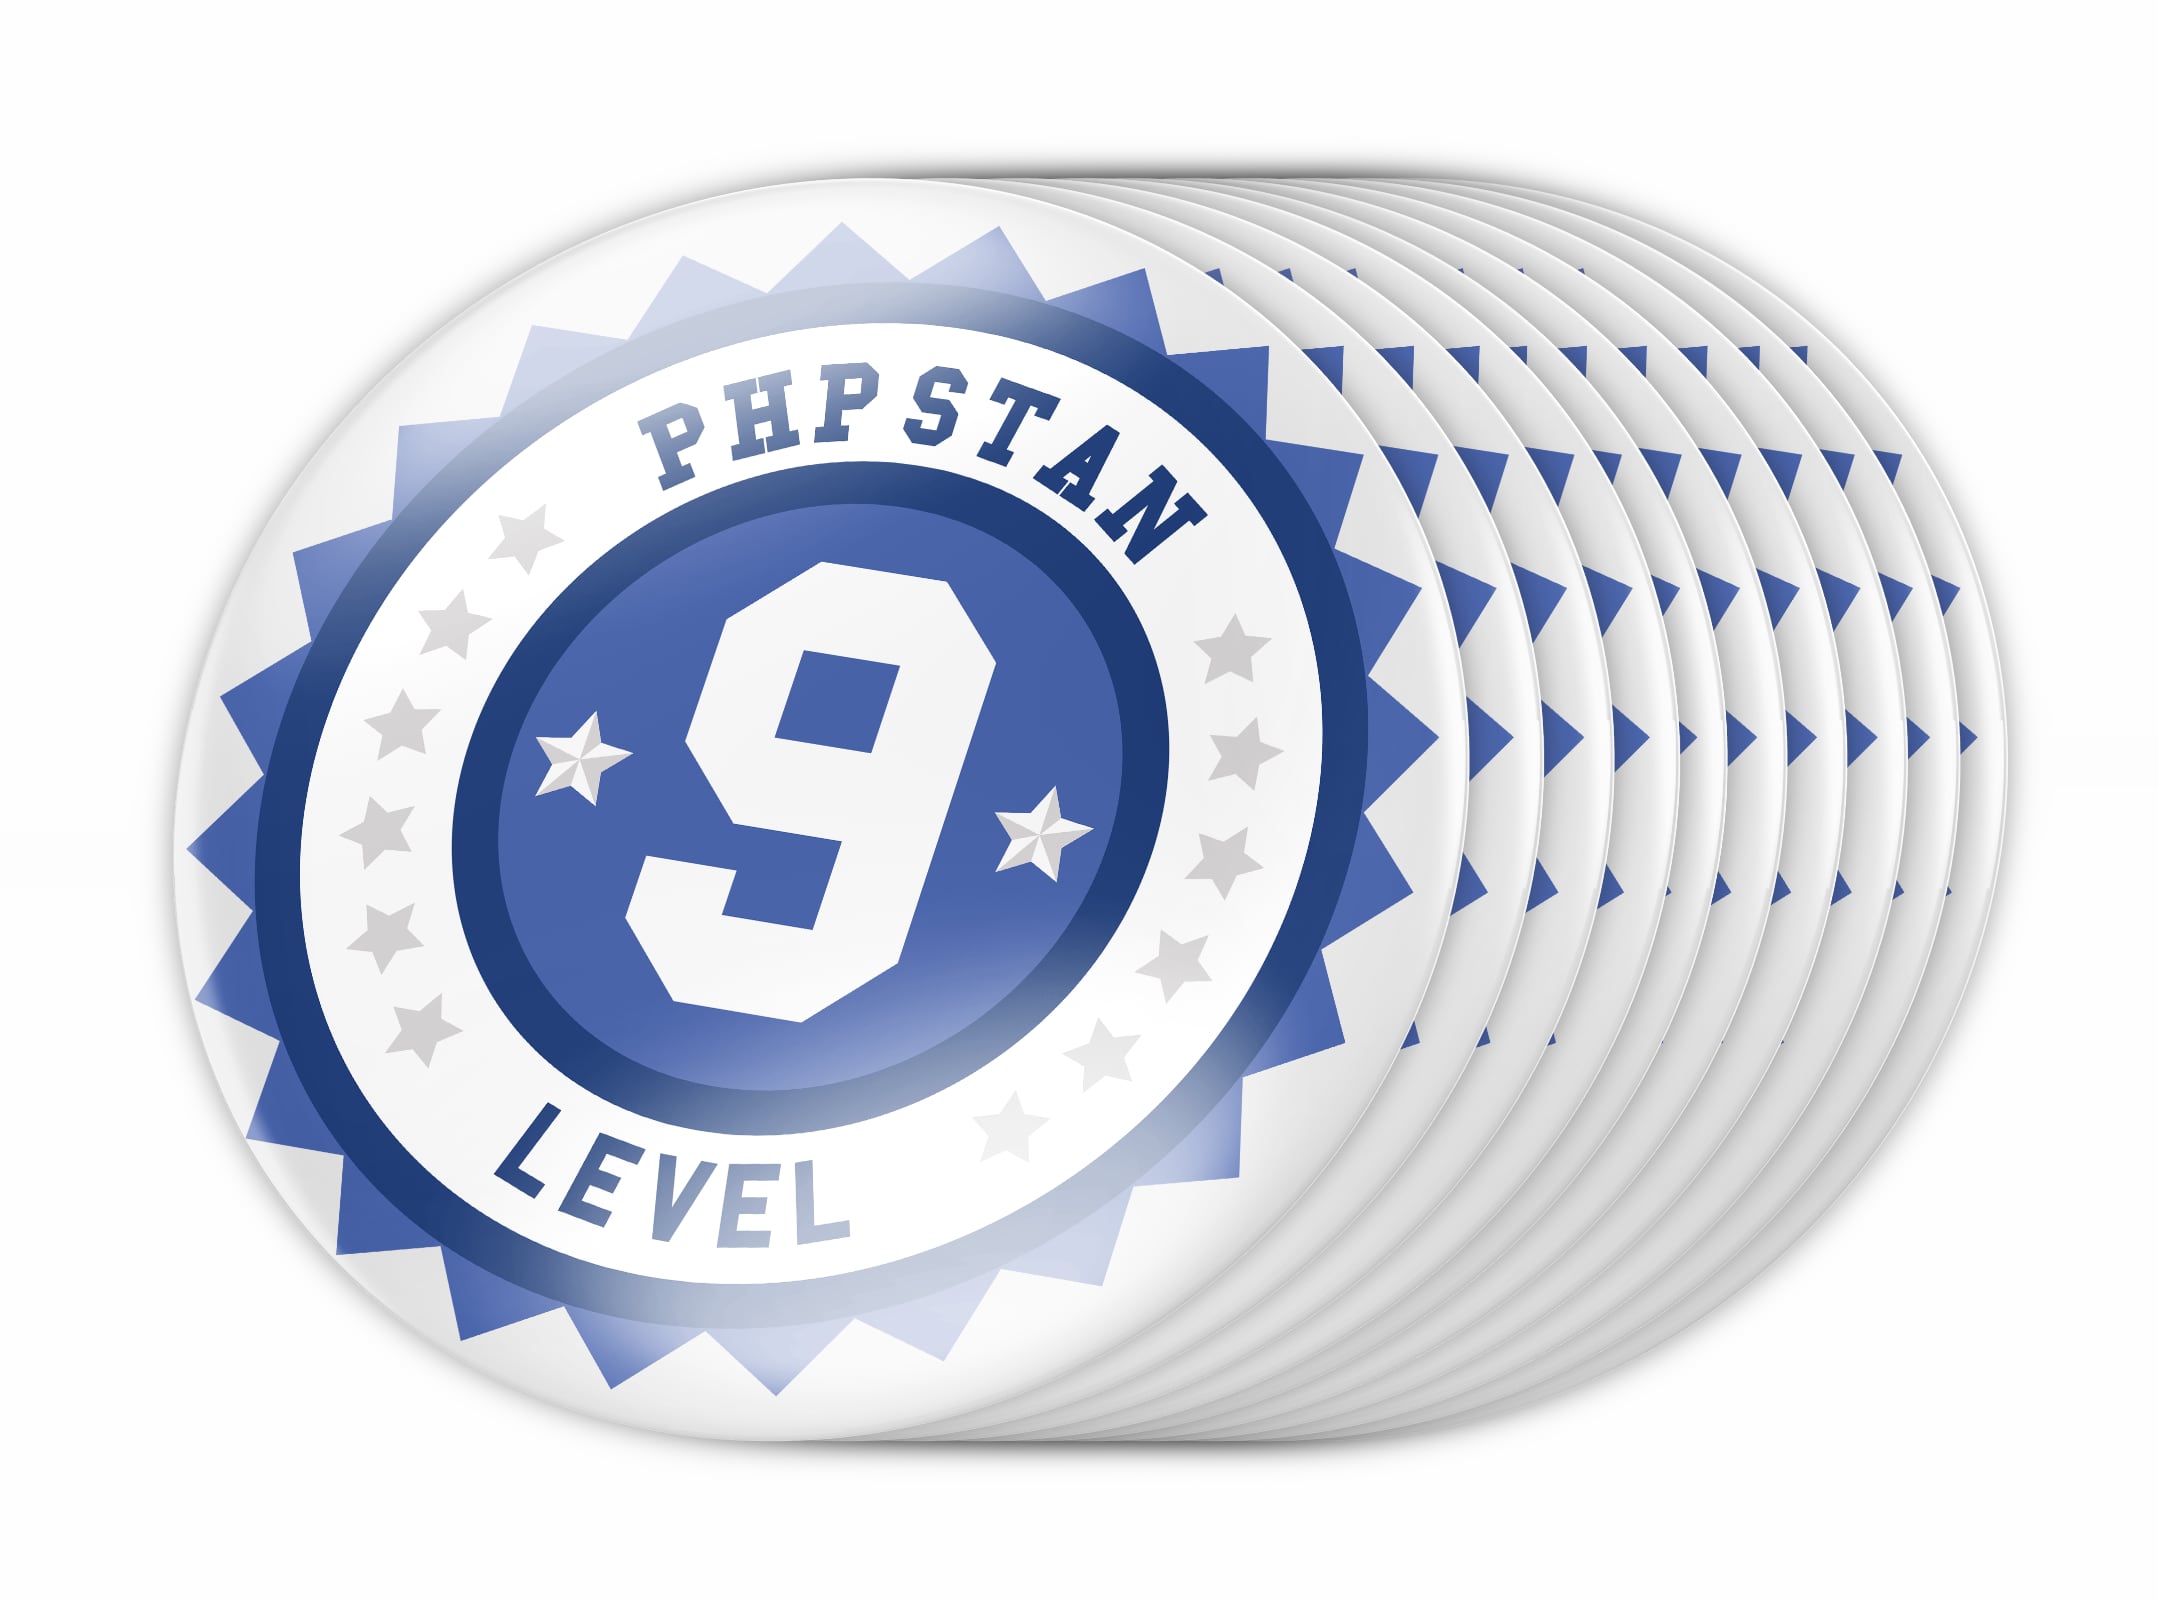 Level badges